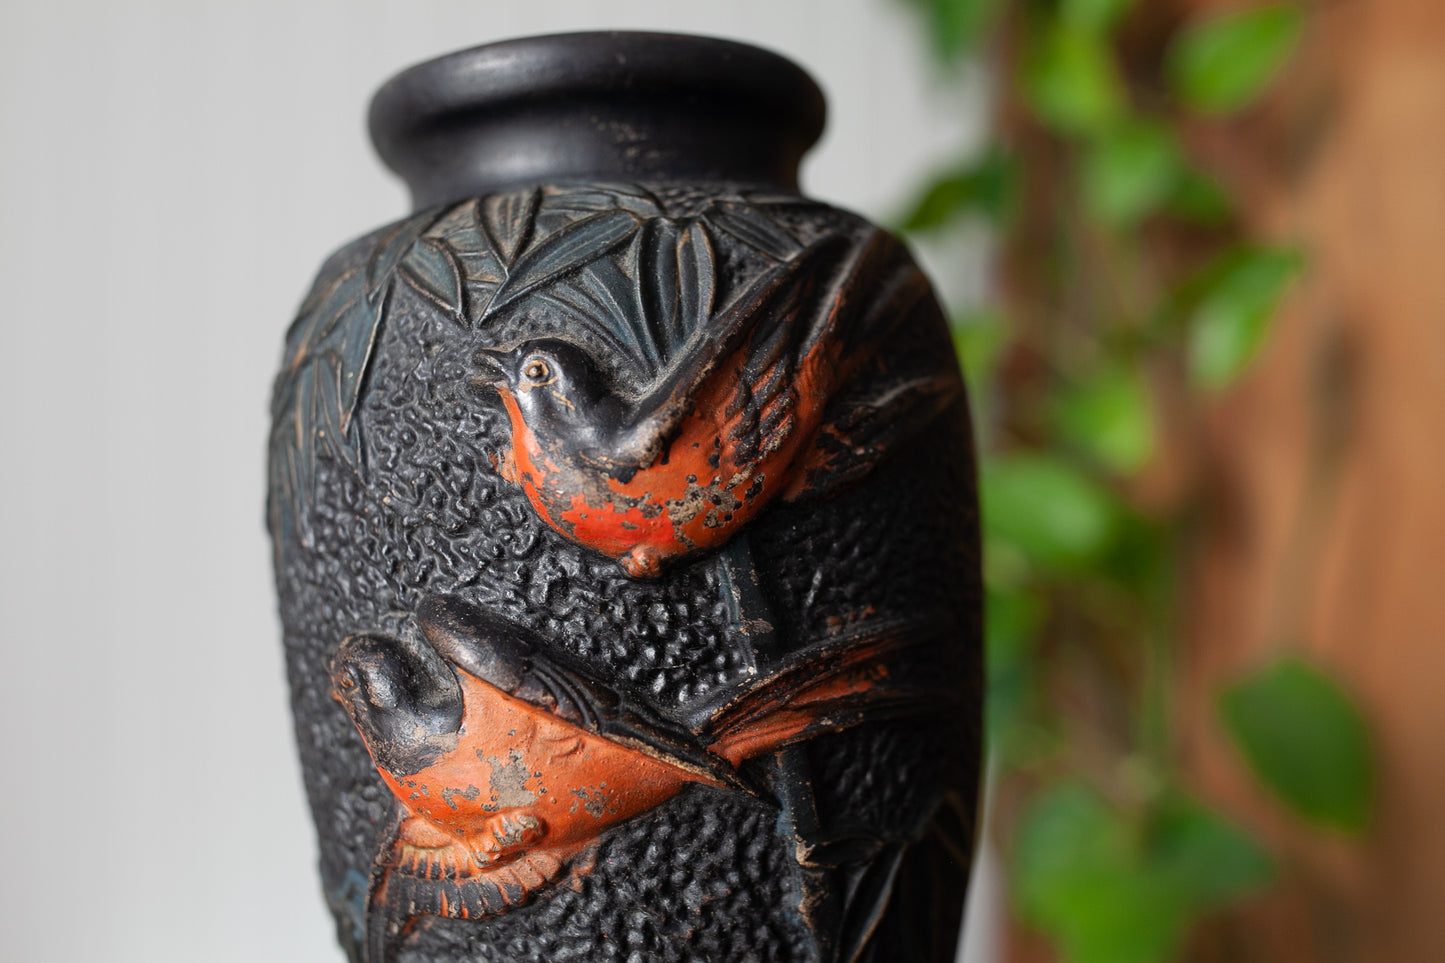 Vintage Black Vase with Birds- Orange And black Vase-Vintage Birds-Tokanabe Ware